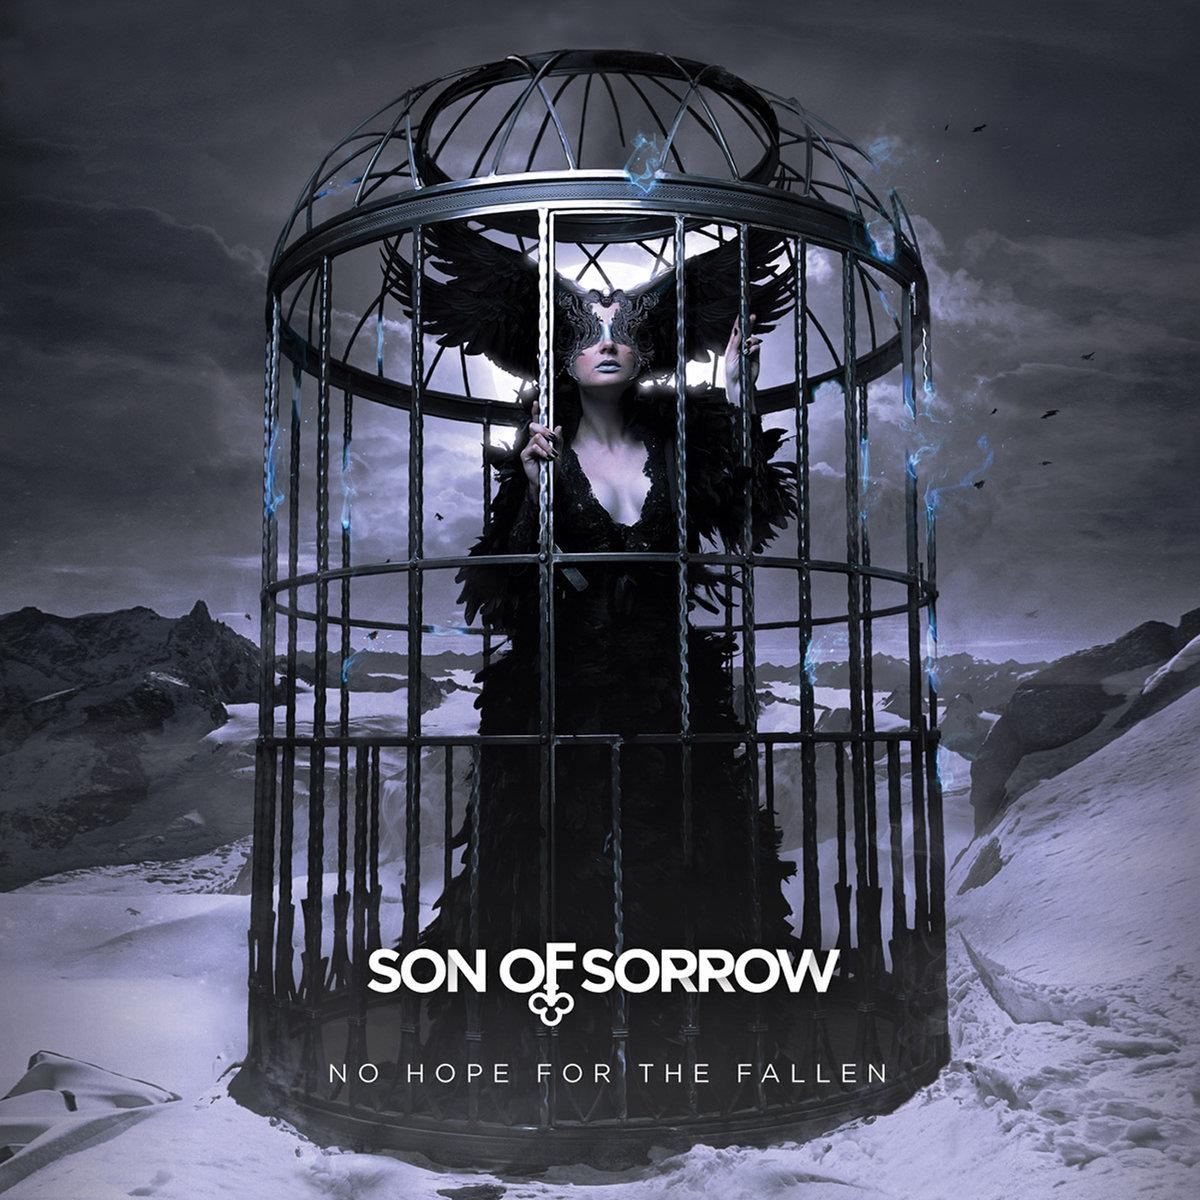 Fallen flac. Sorrow. For my Sorrow альбом the Fallen State. Sorrow Music. October Noir.